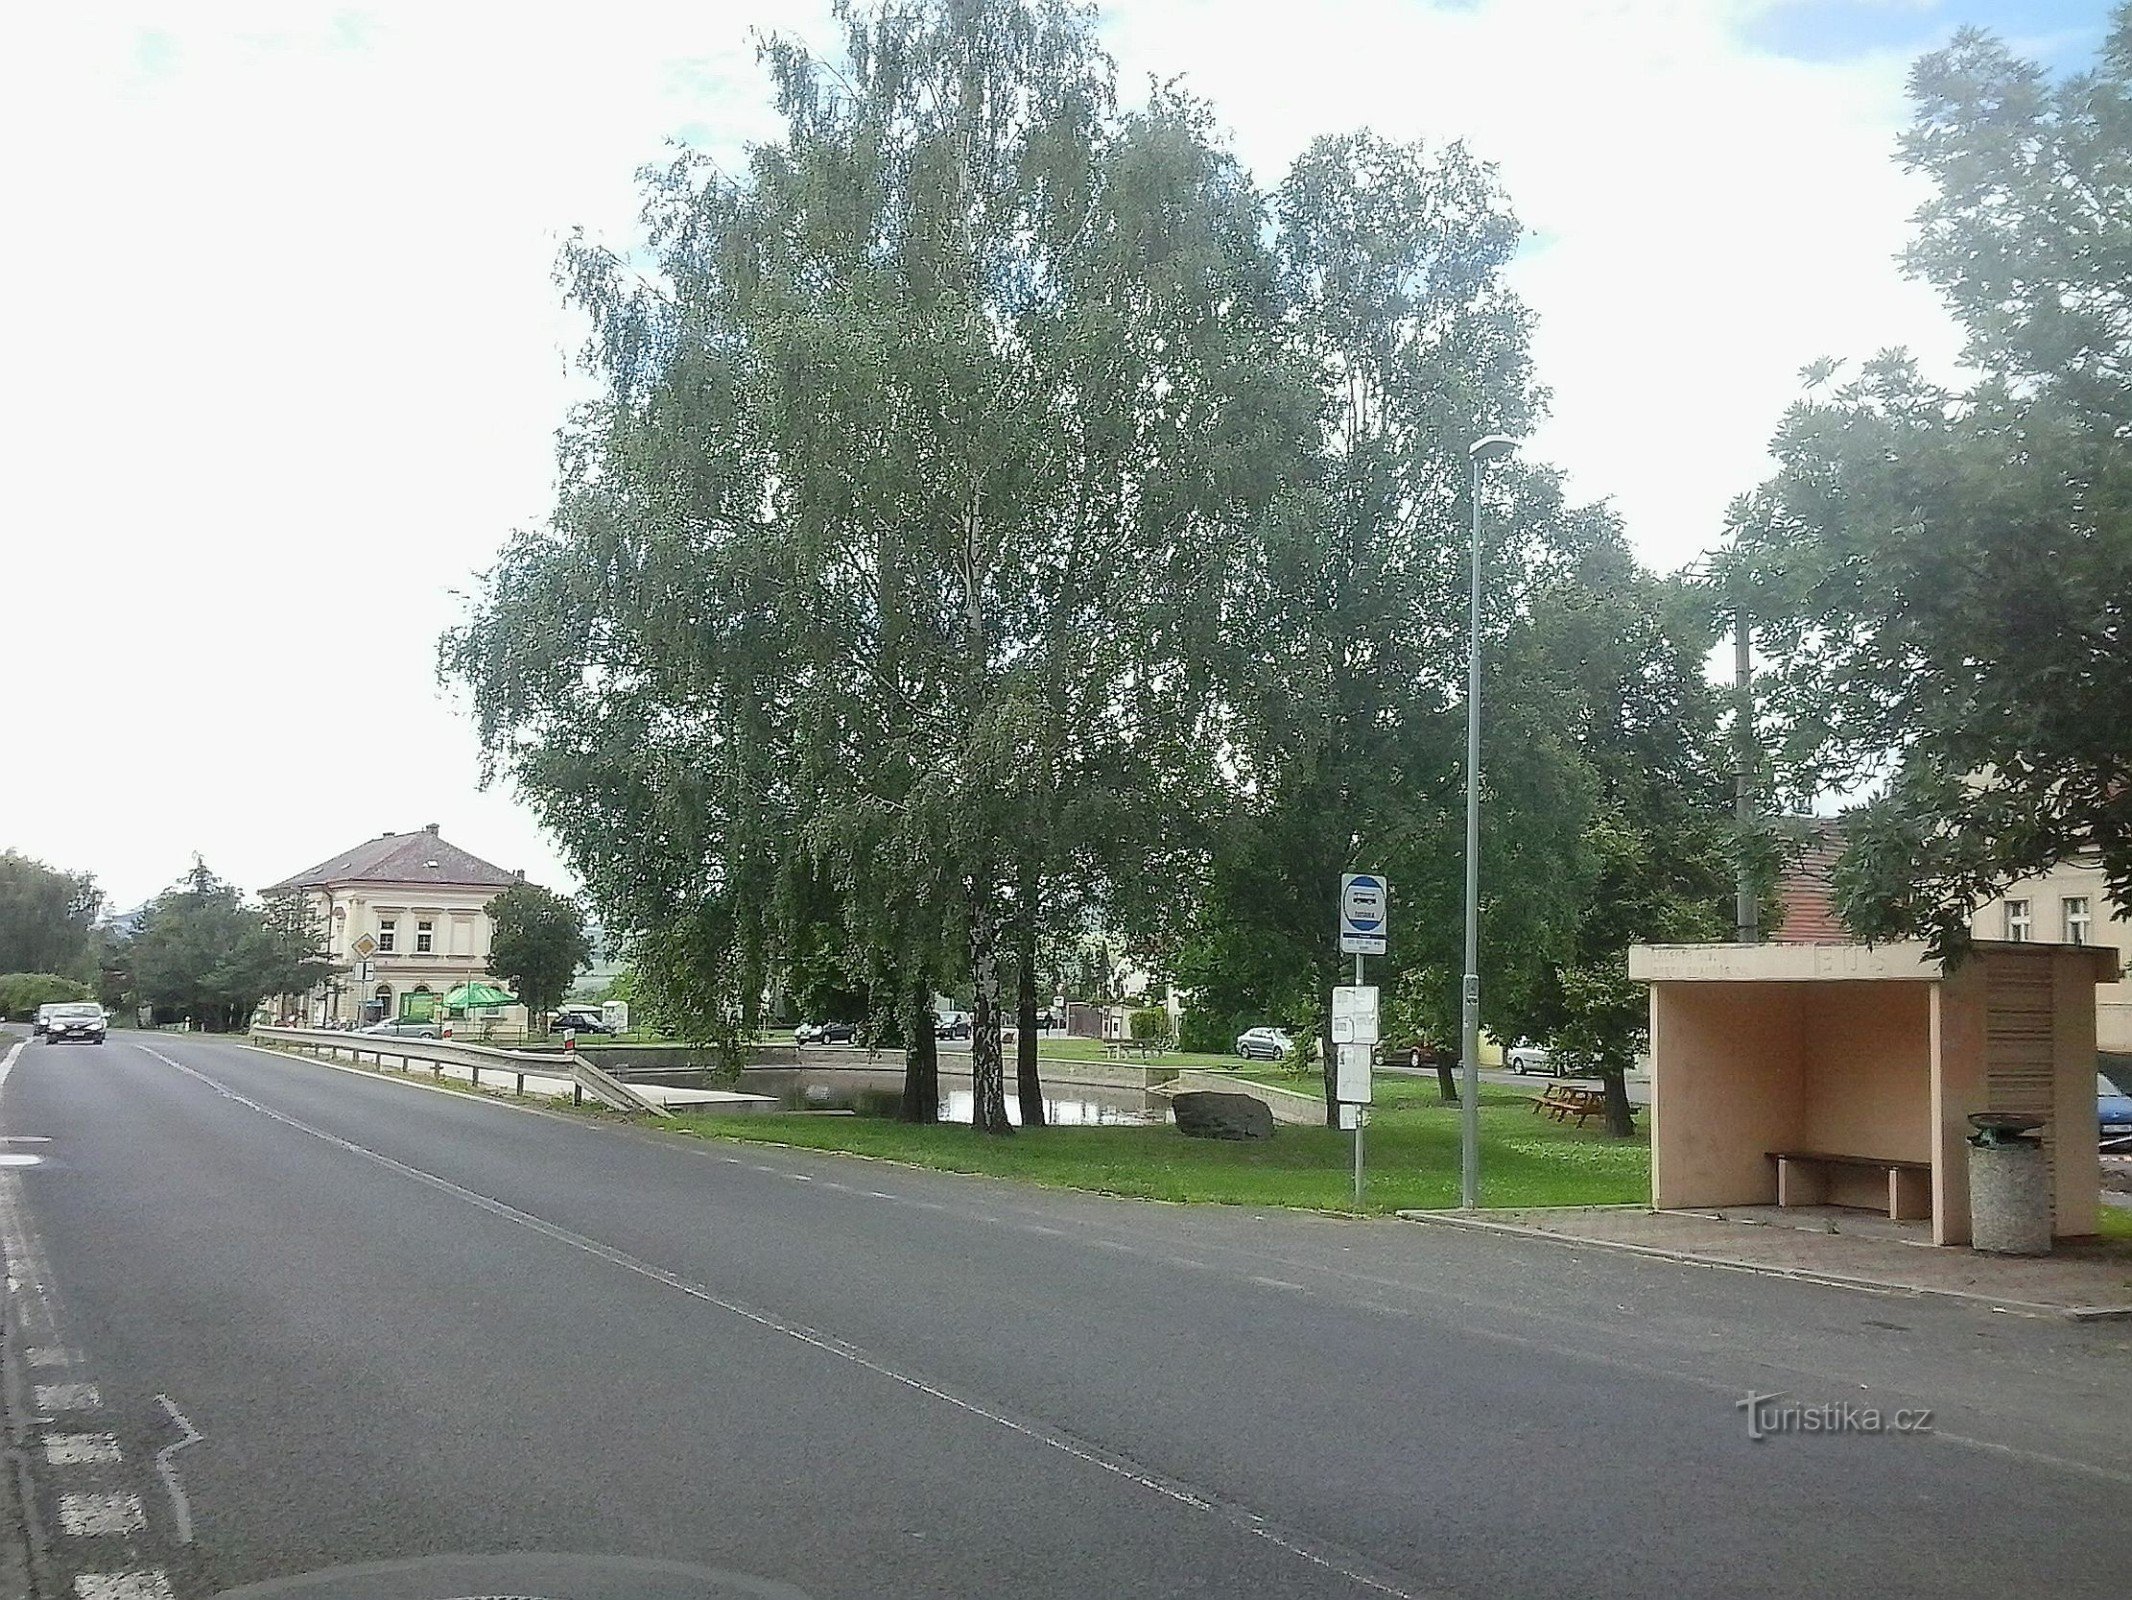 Trnovany κοντά στο Litoměřice